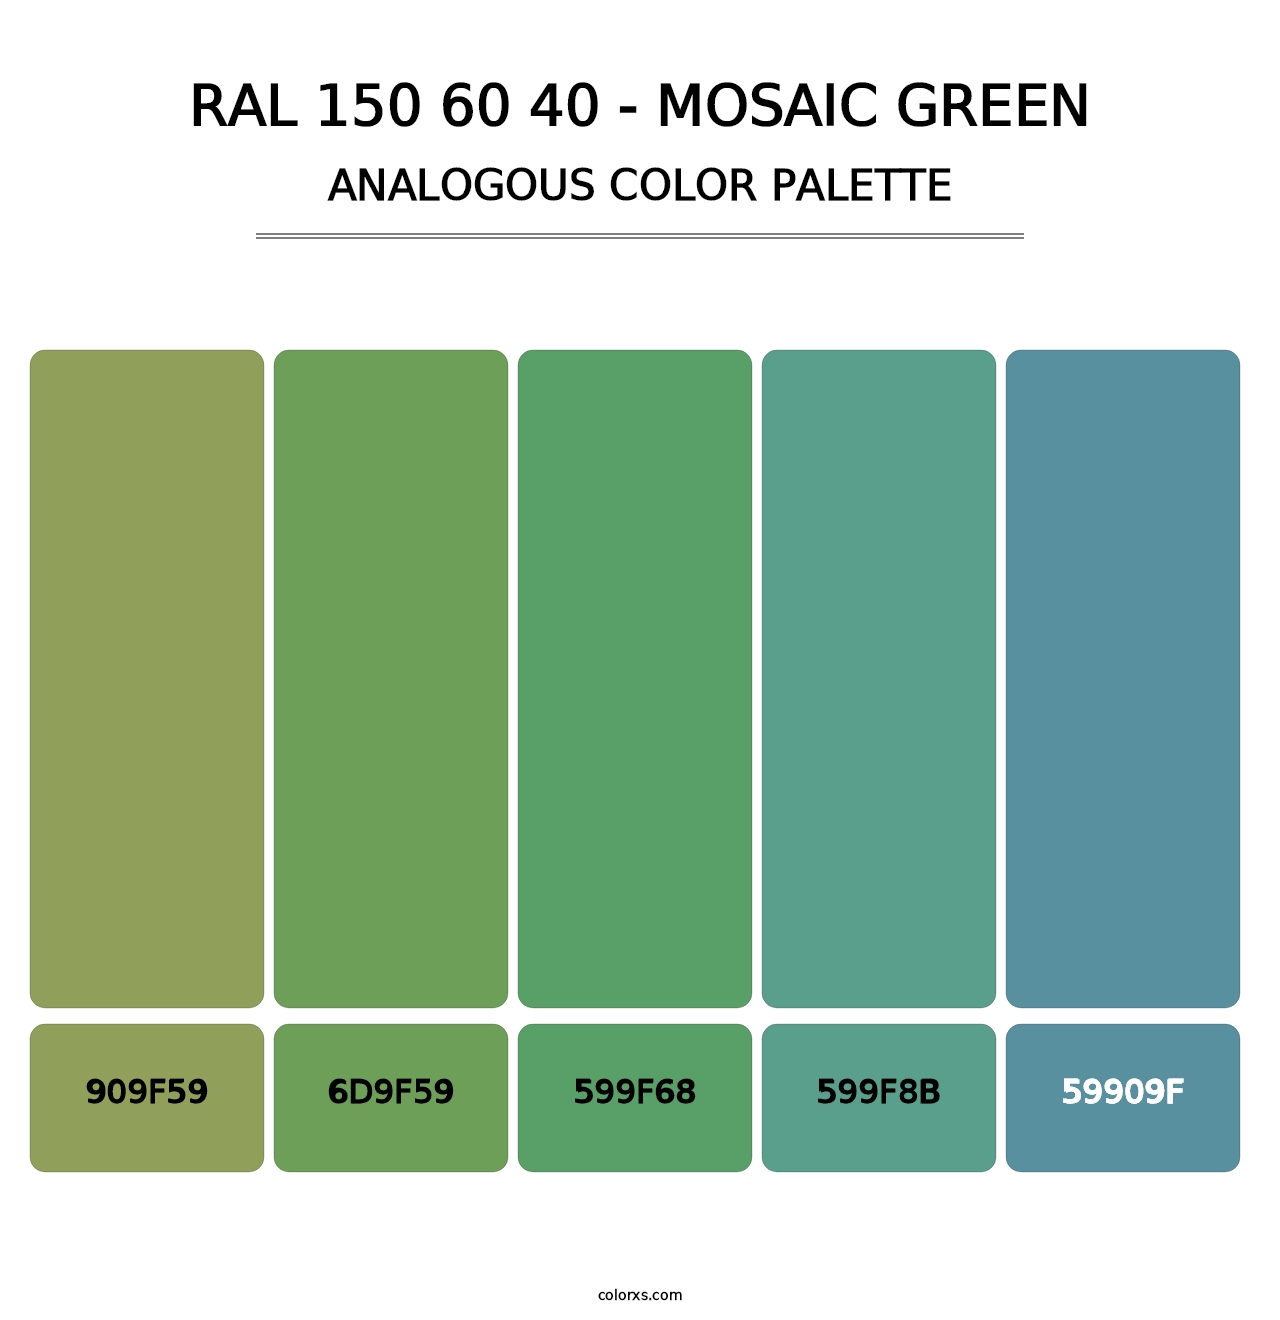 RAL 150 60 40 - Mosaic Green - Analogous Color Palette